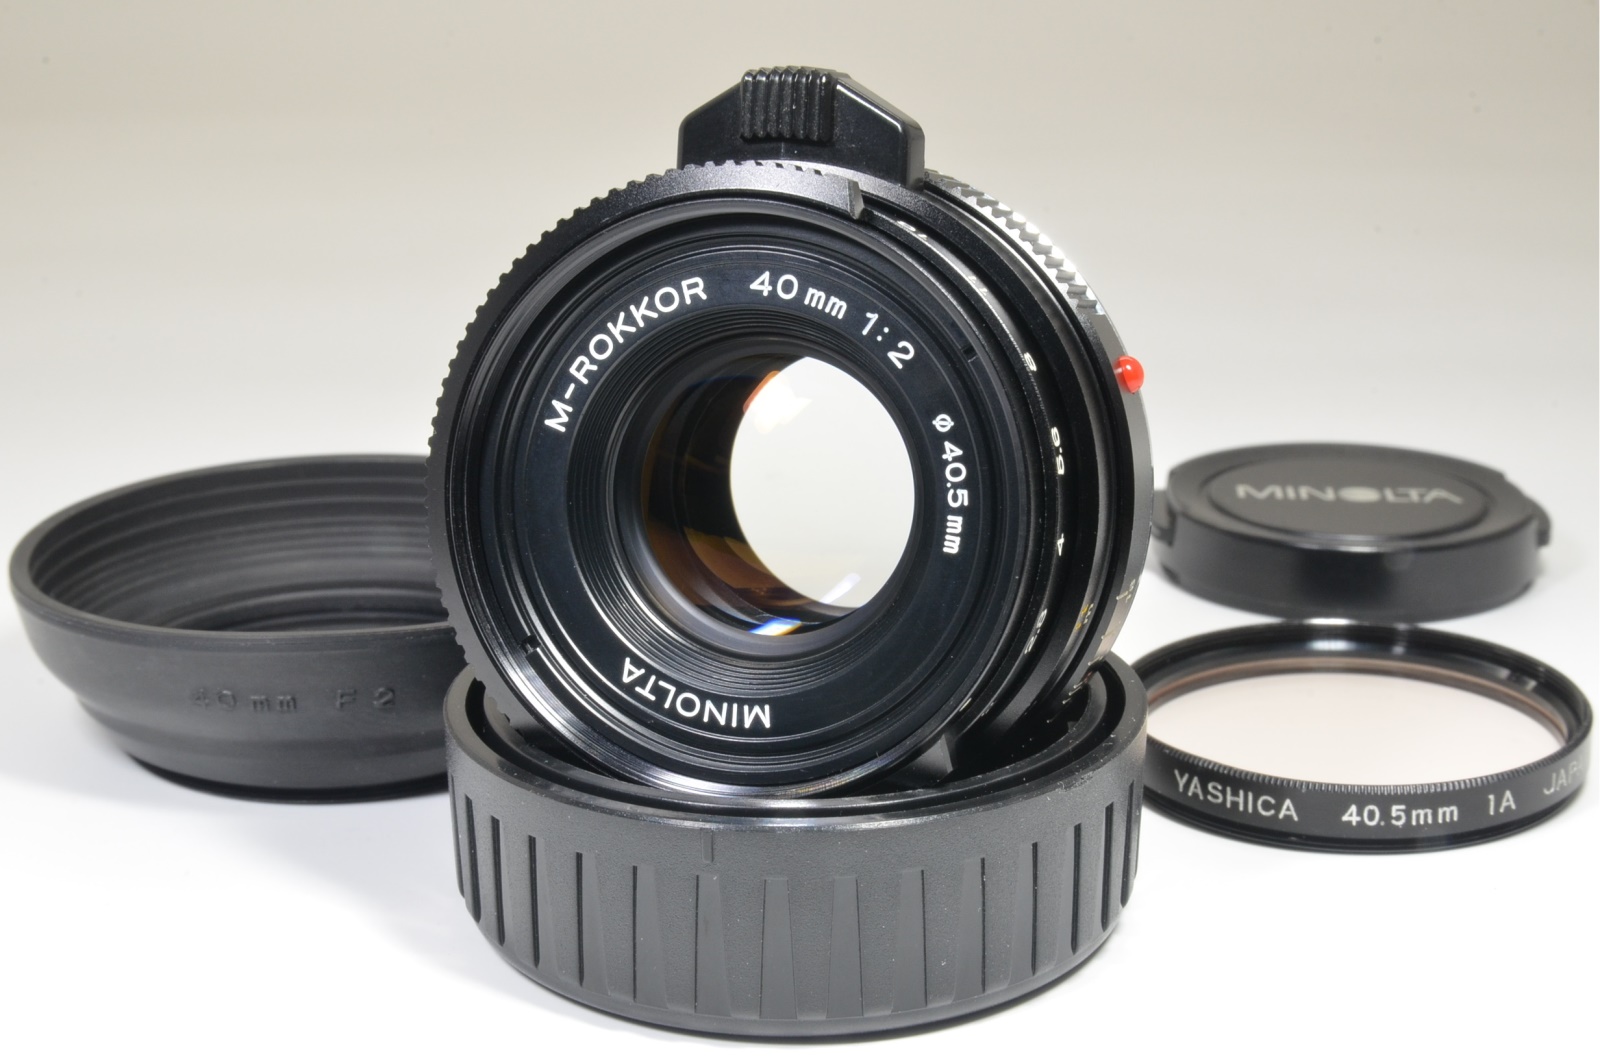 minolta cle film camera, m-rokkor lens 40mm, 90mm, flash, grip, shooting tested